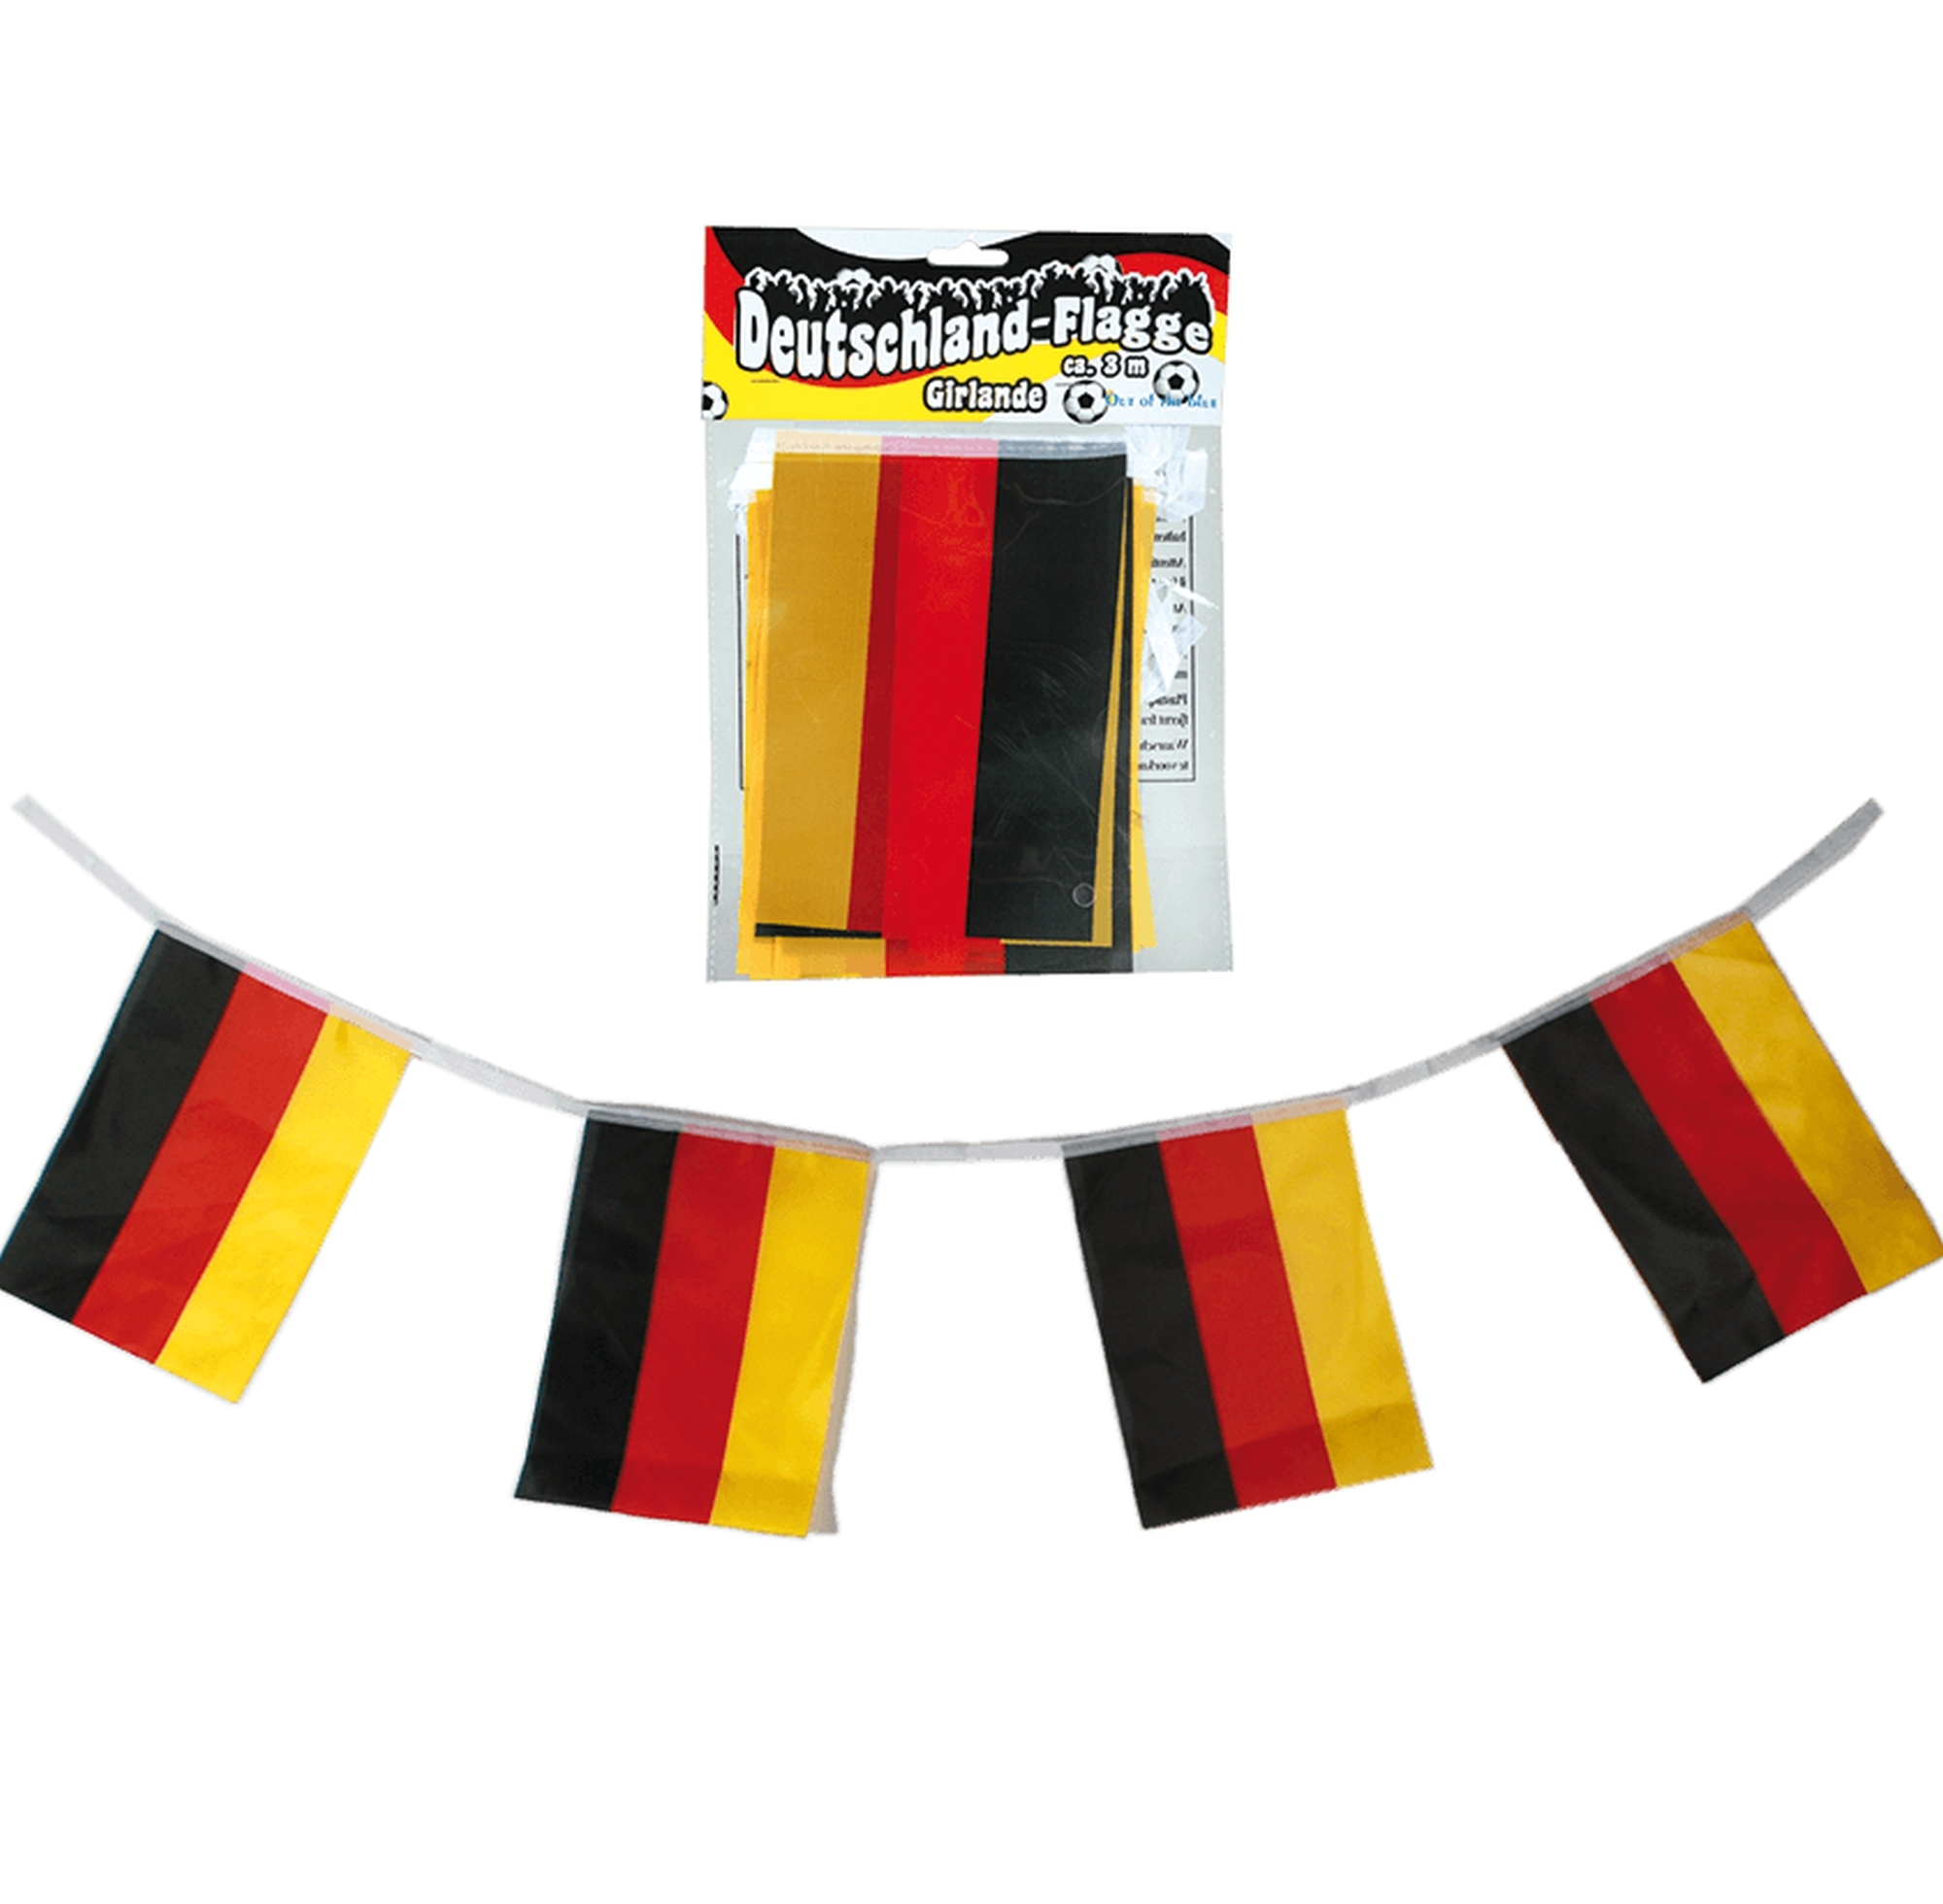 Deutschlandflagge-Girlande